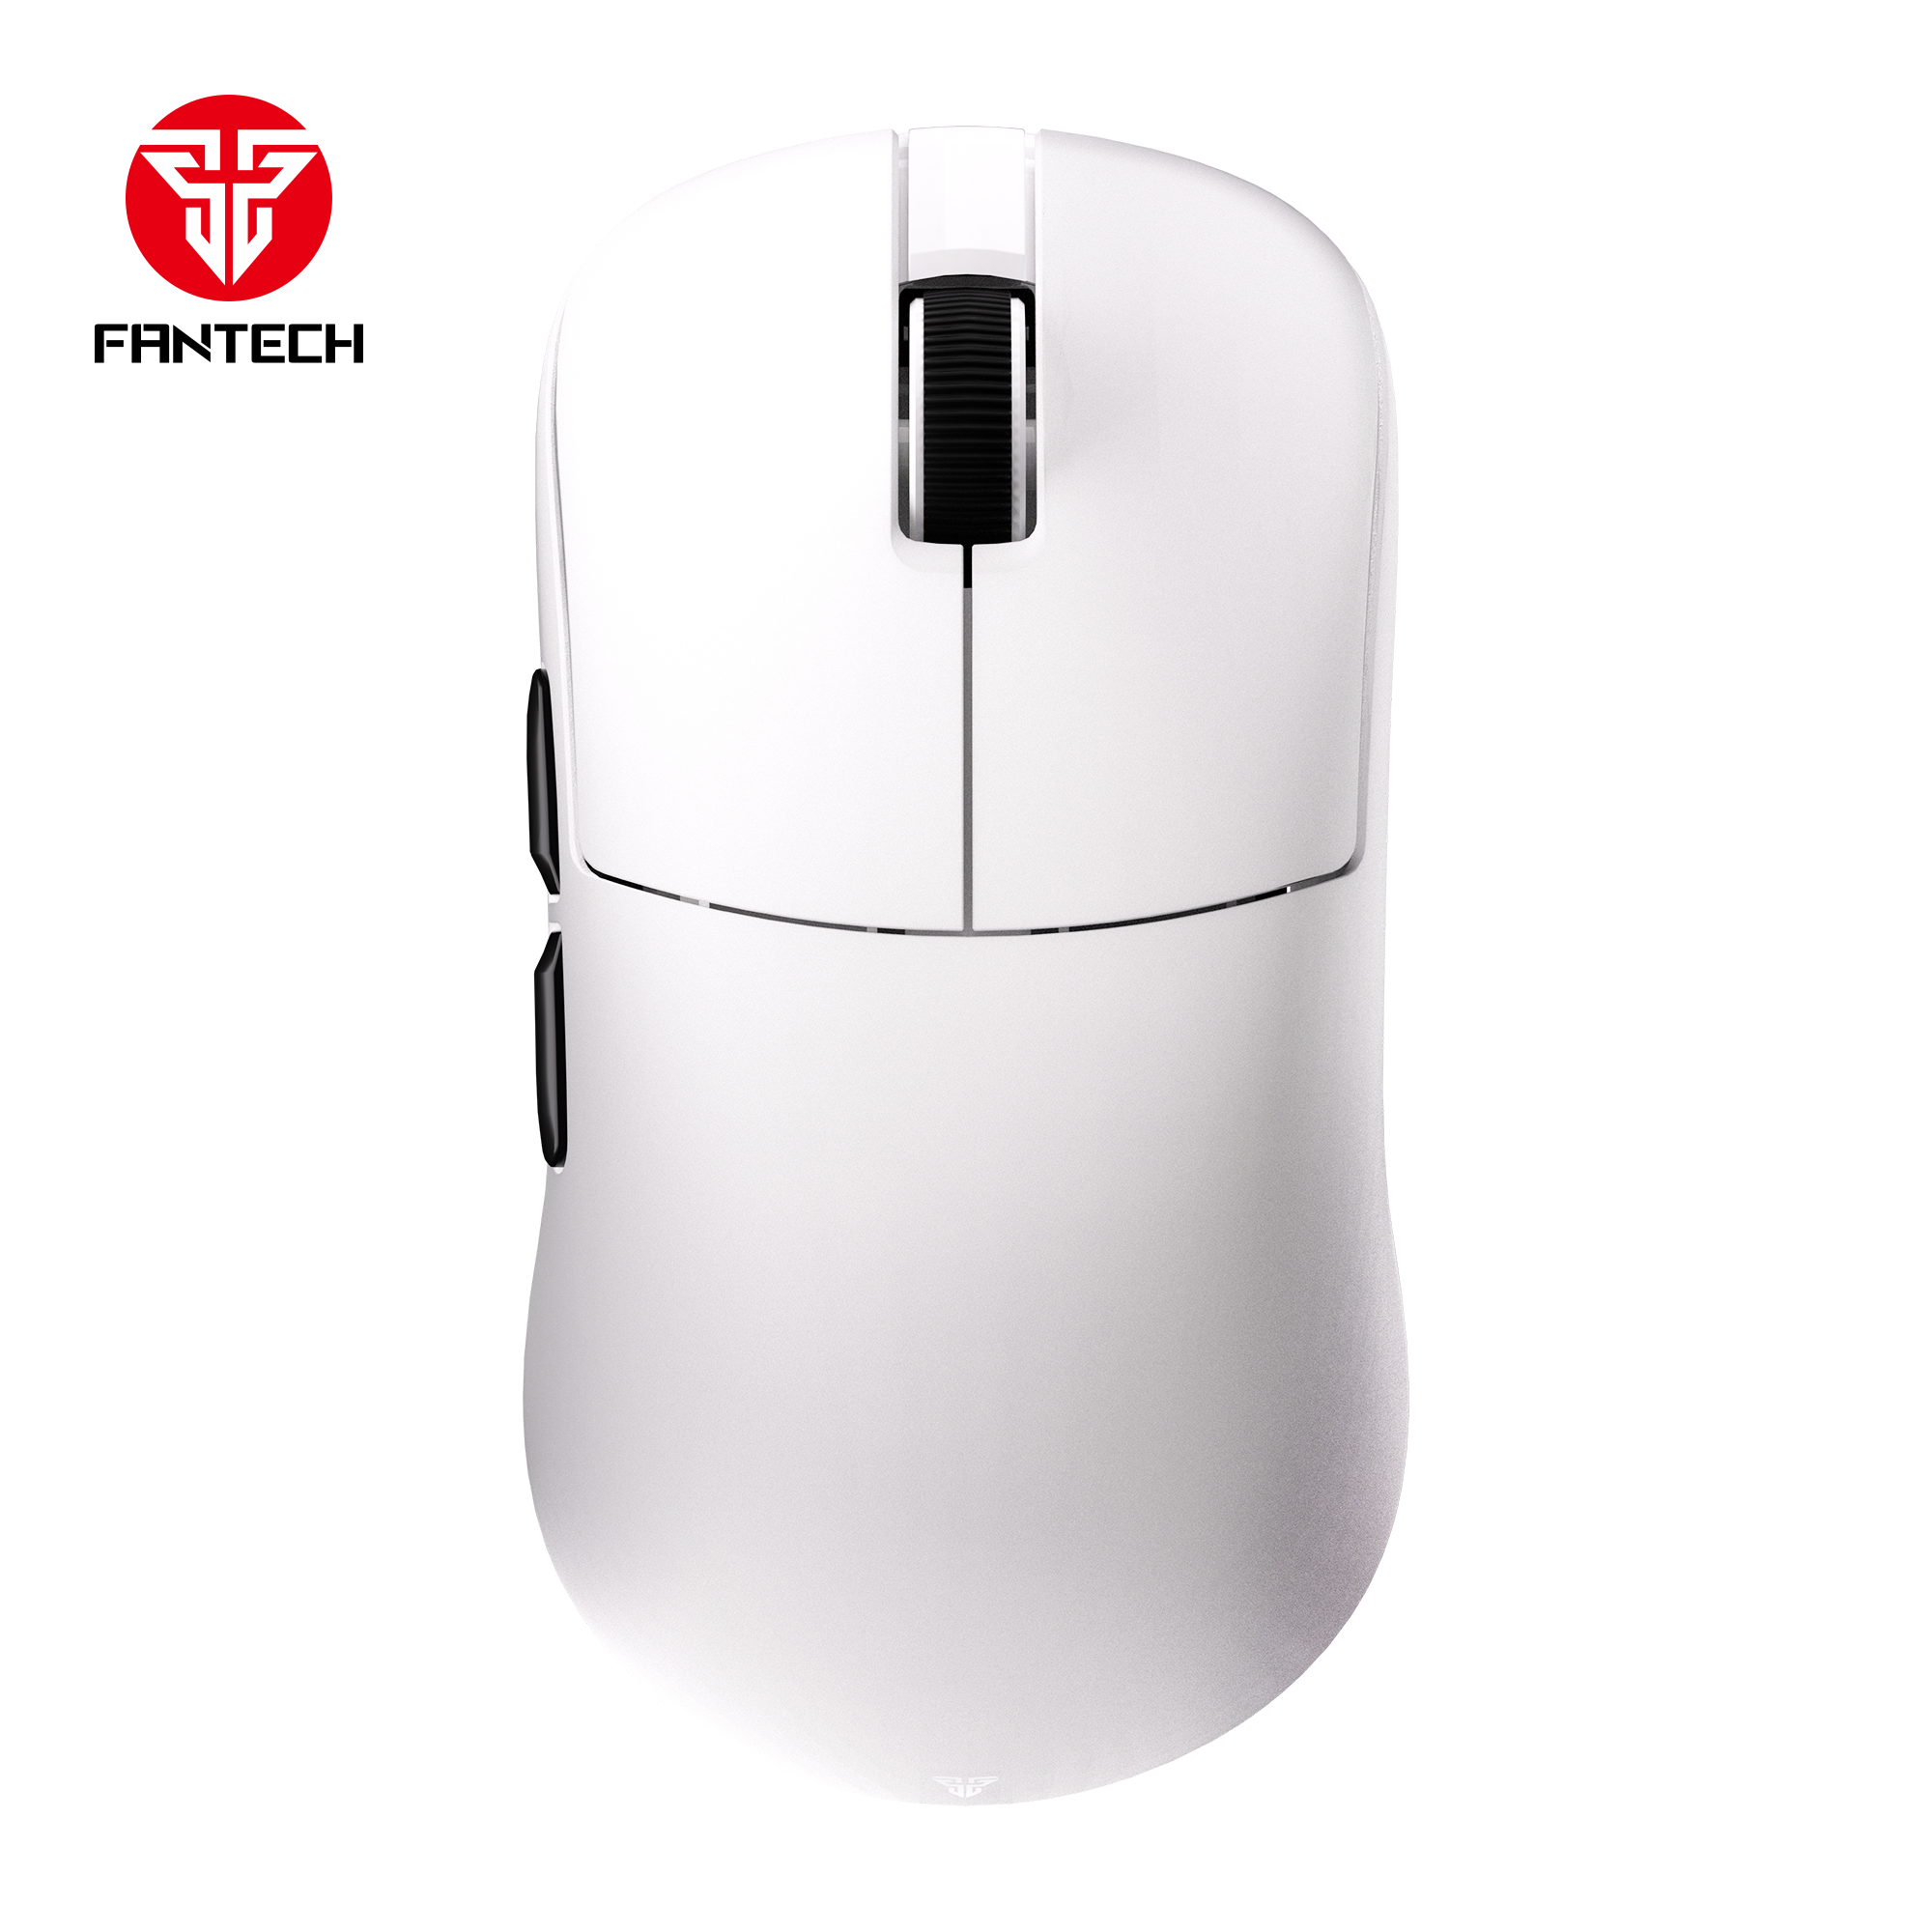 Fantech Helios II XD3 V3 Gaming Mouse - Fantech Jordan | Gaming Accessories Store 